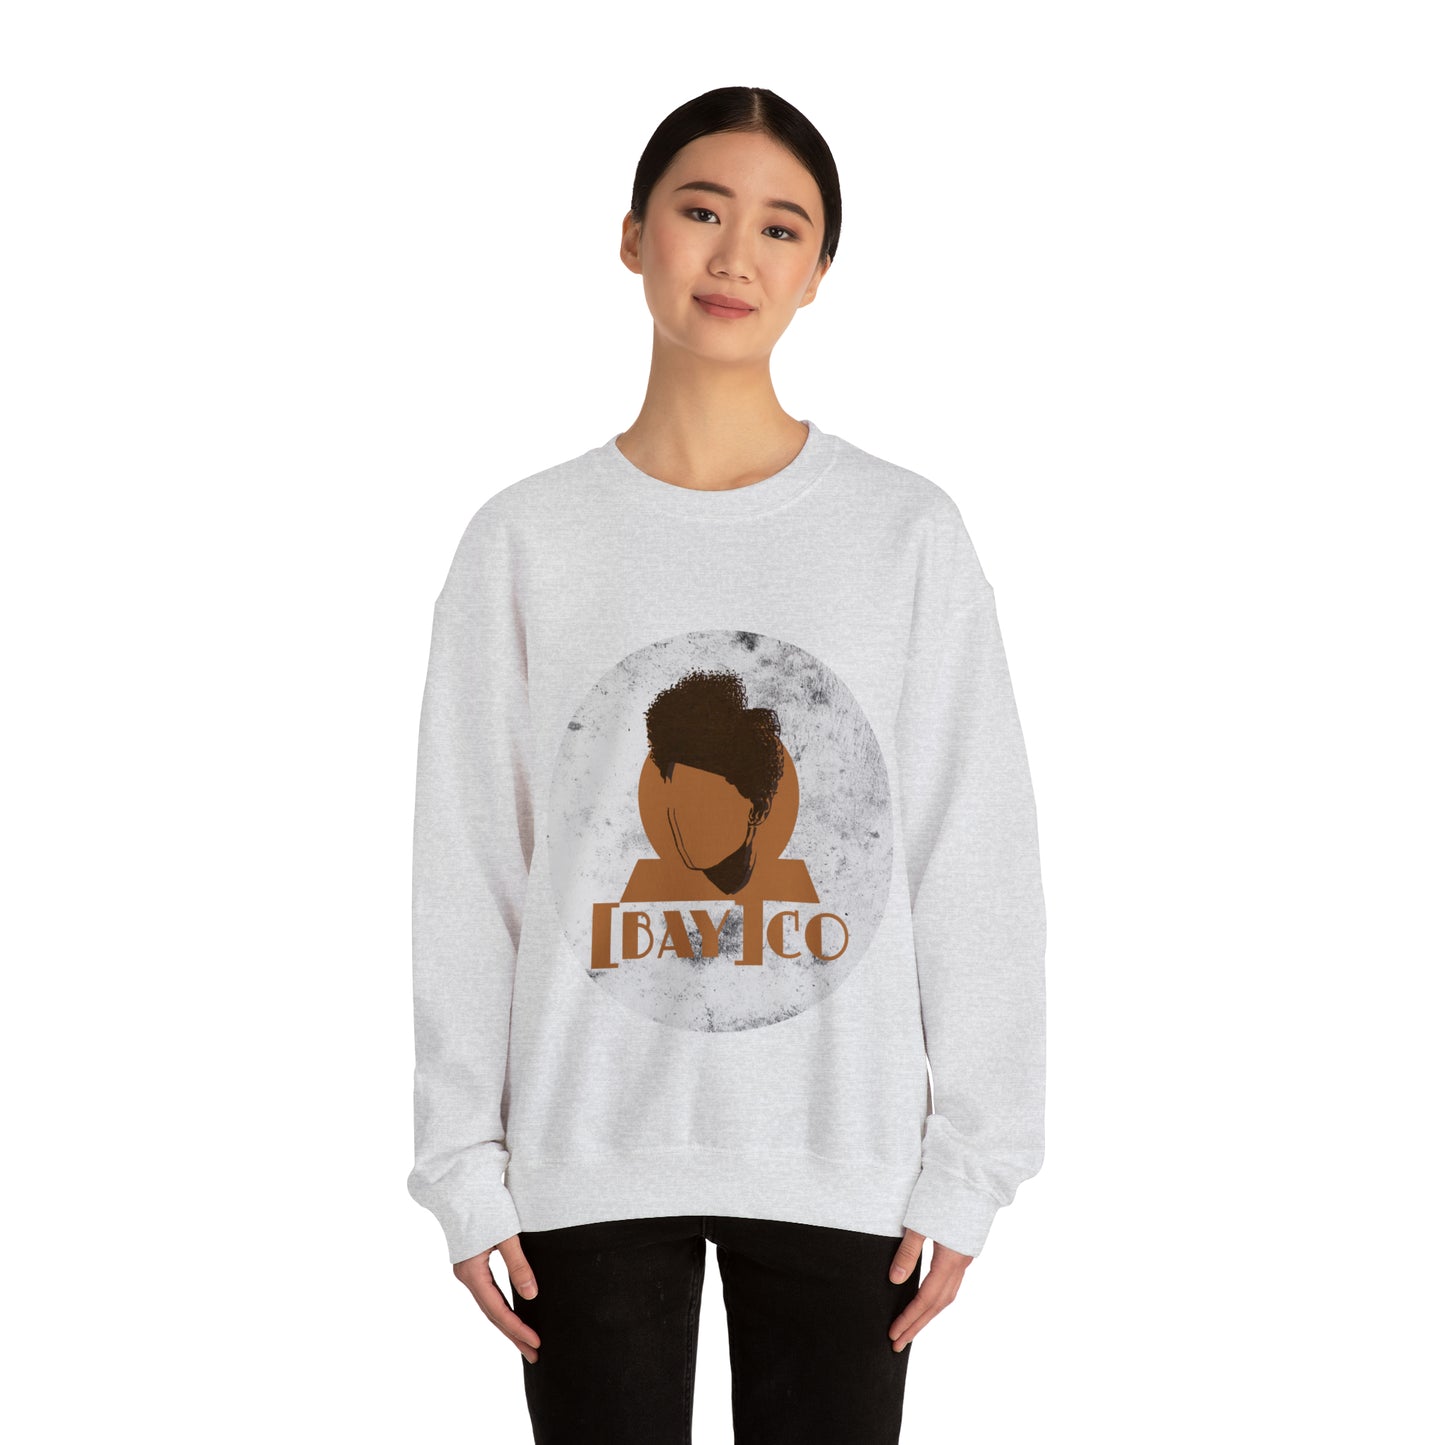 Baeco Brown Sweatshirt